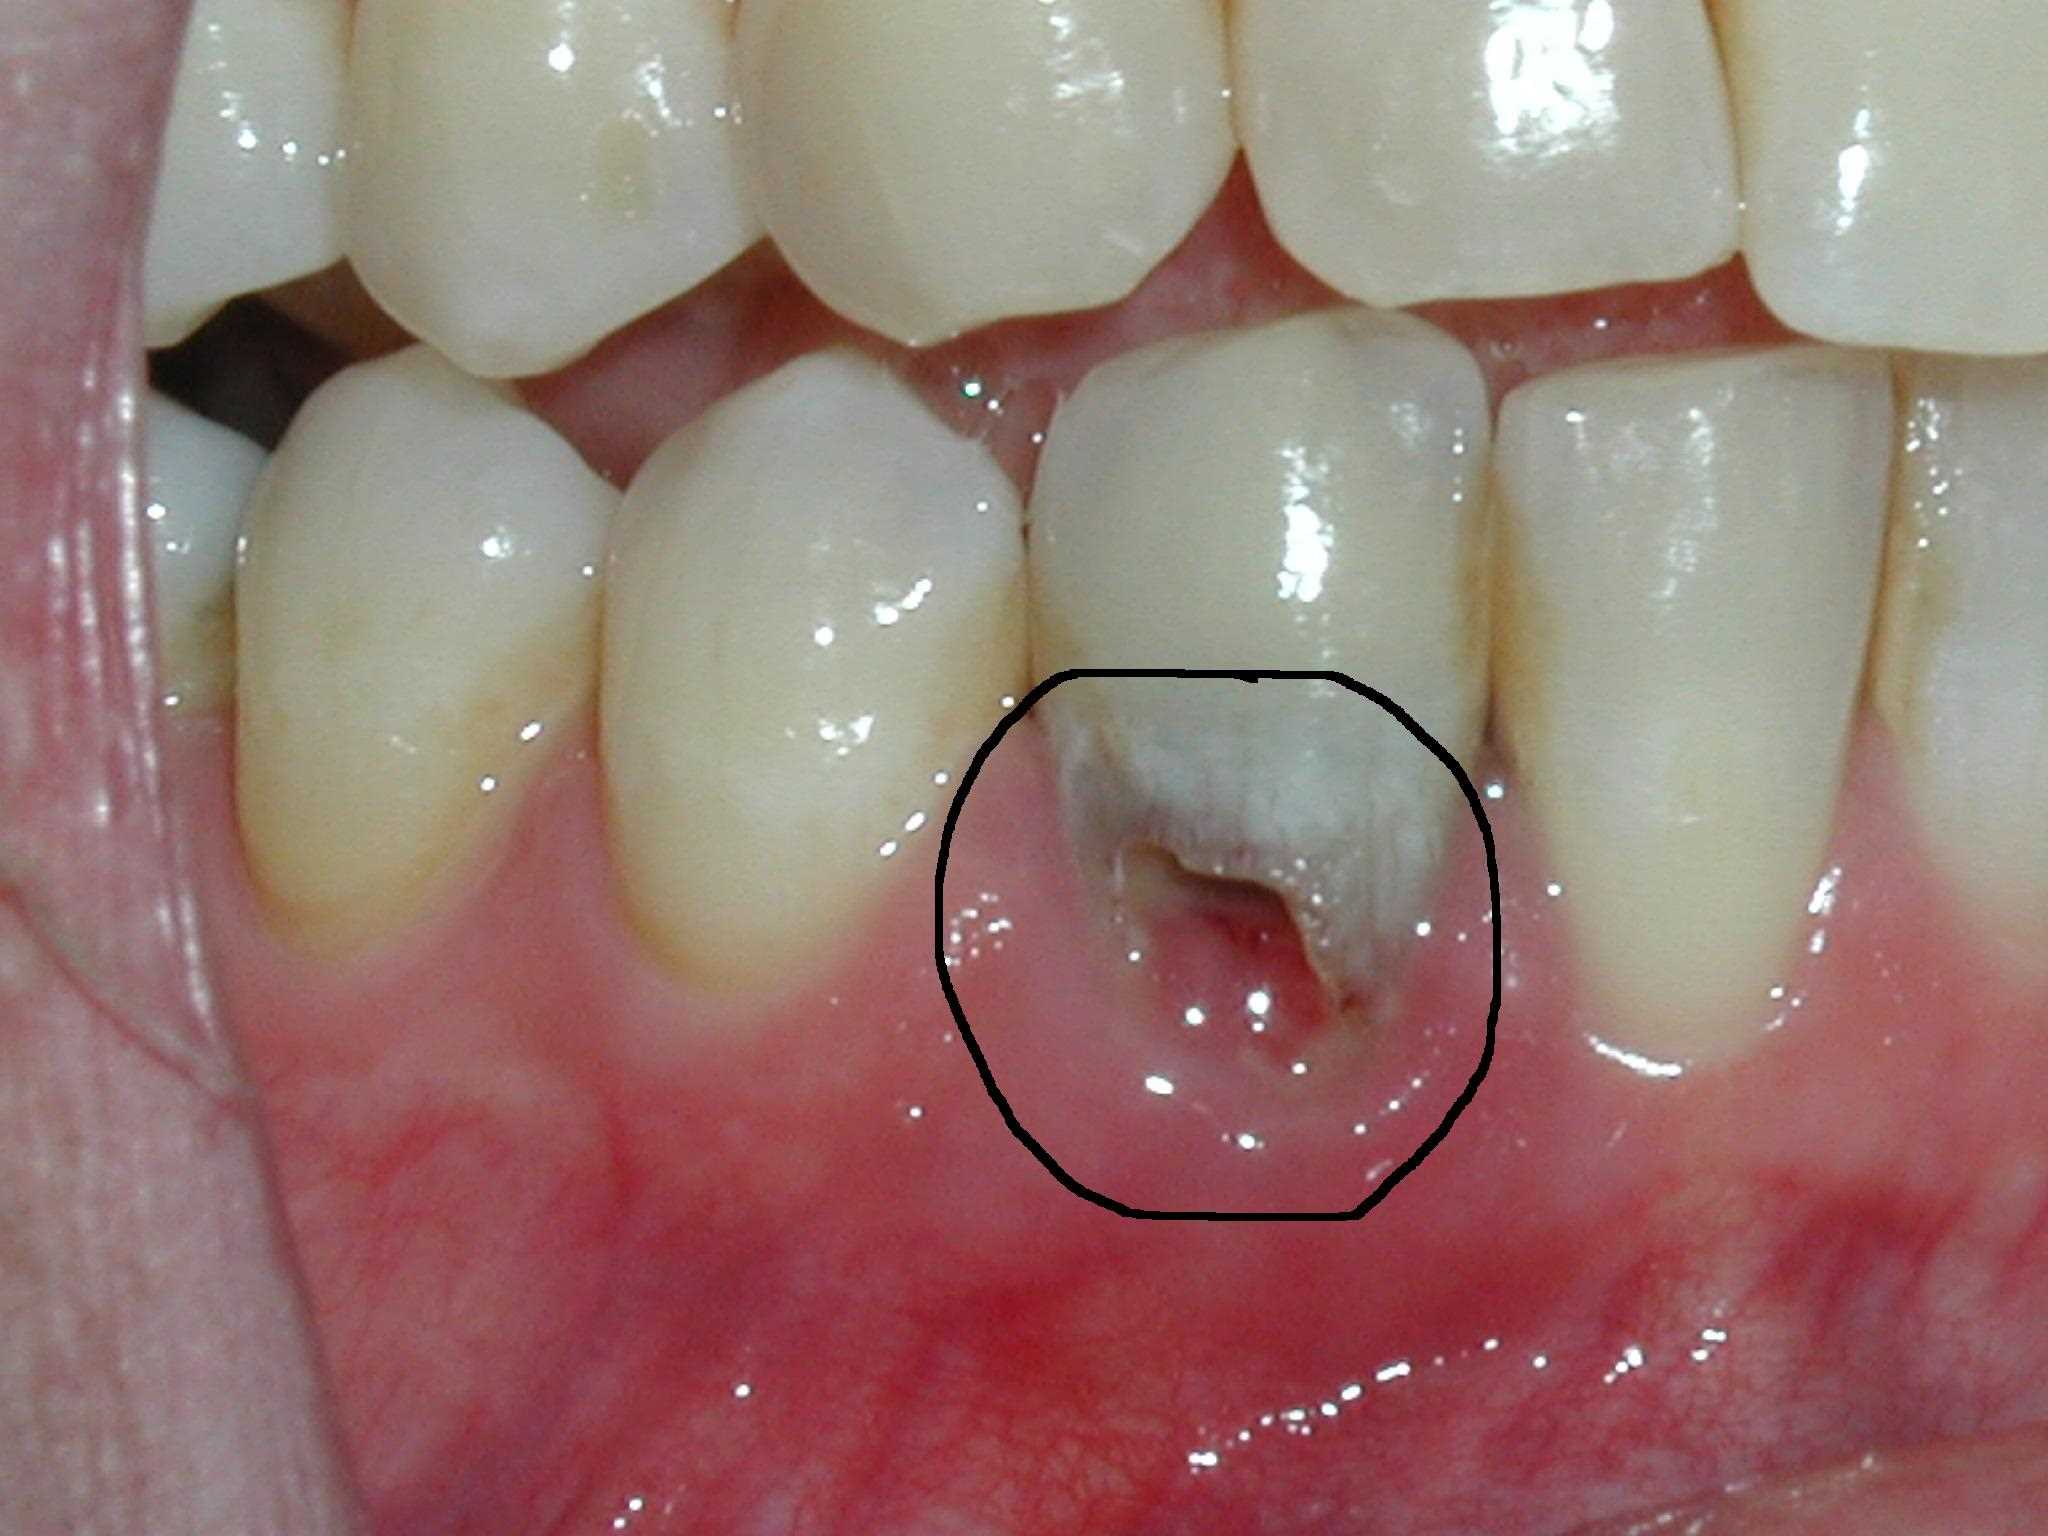 external resorption of tooth